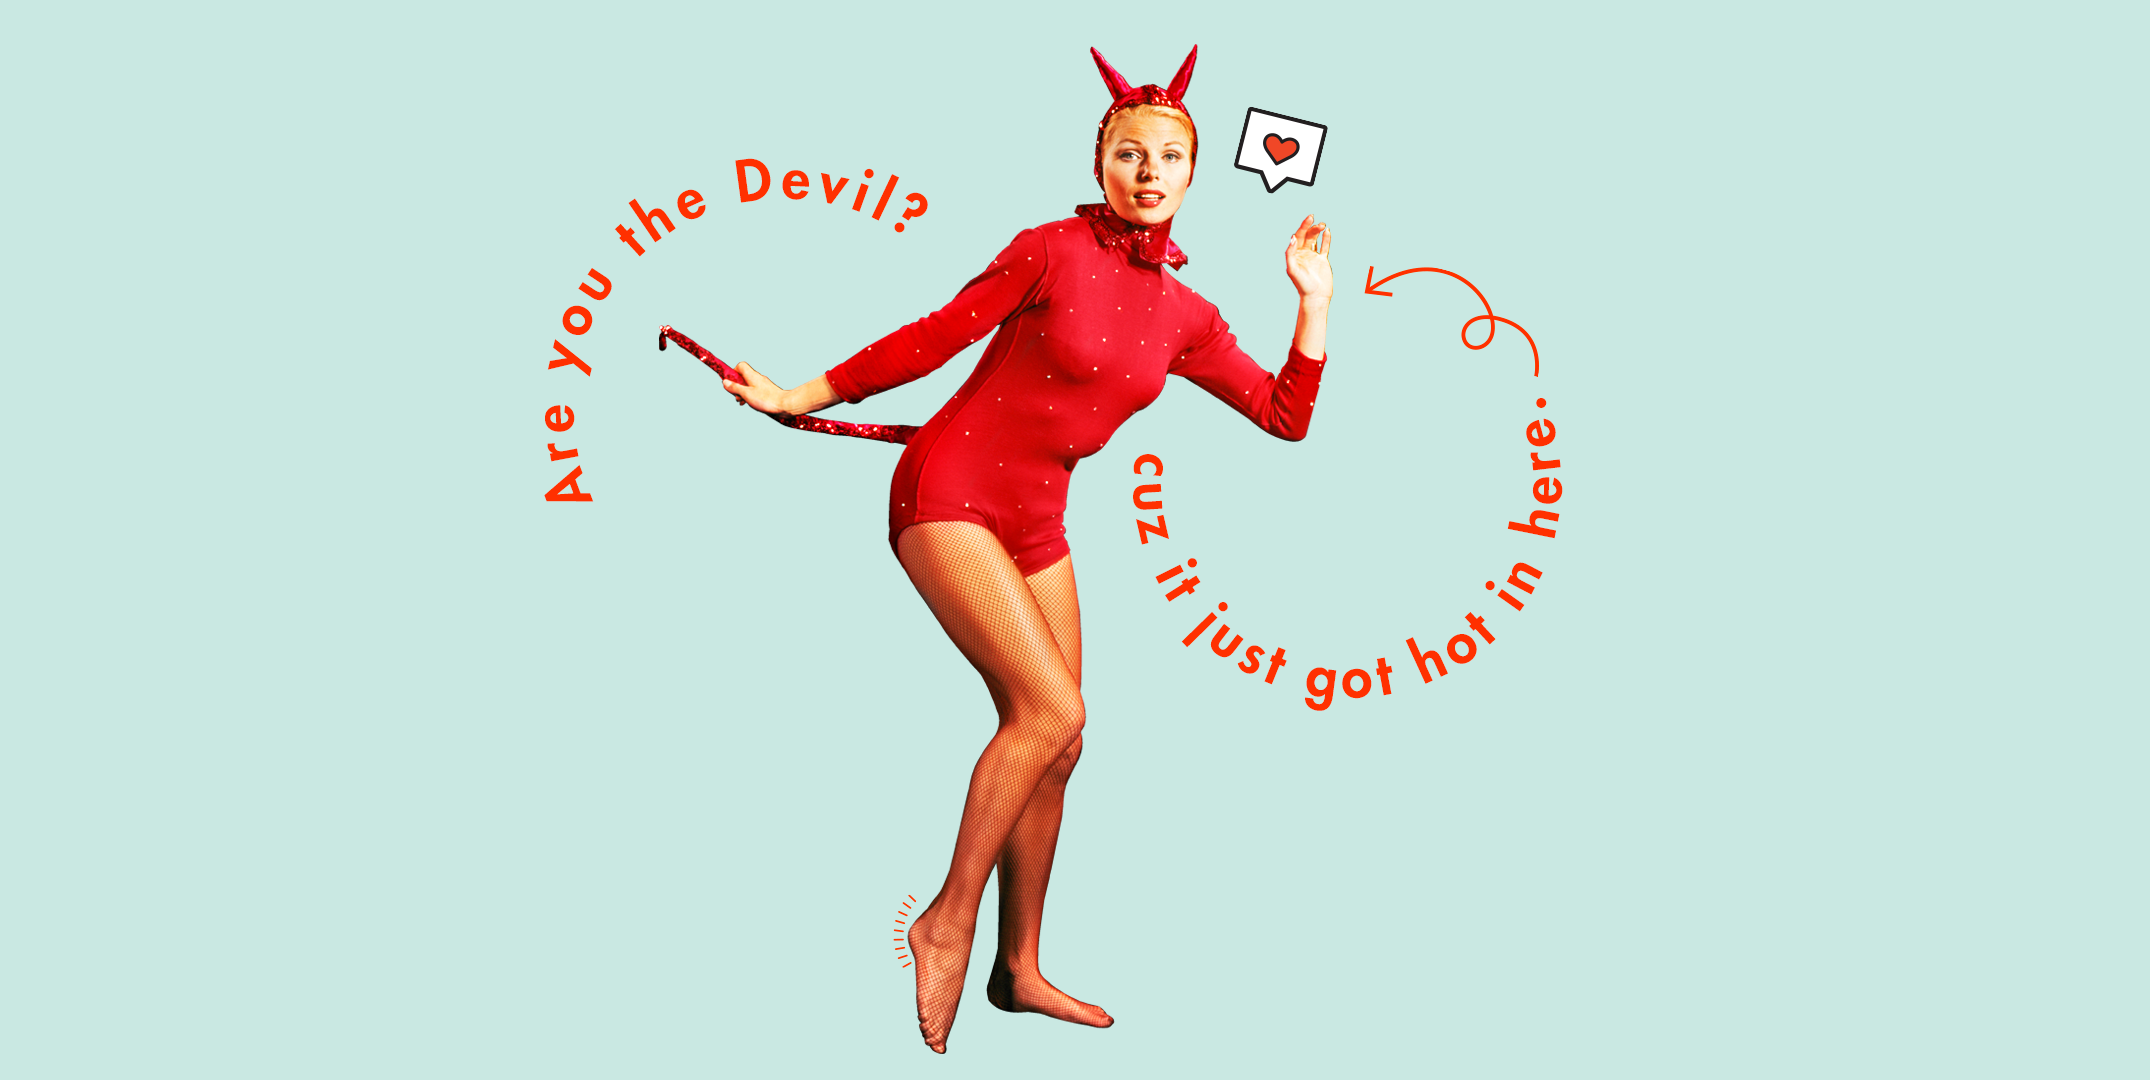 Dirty devil chat